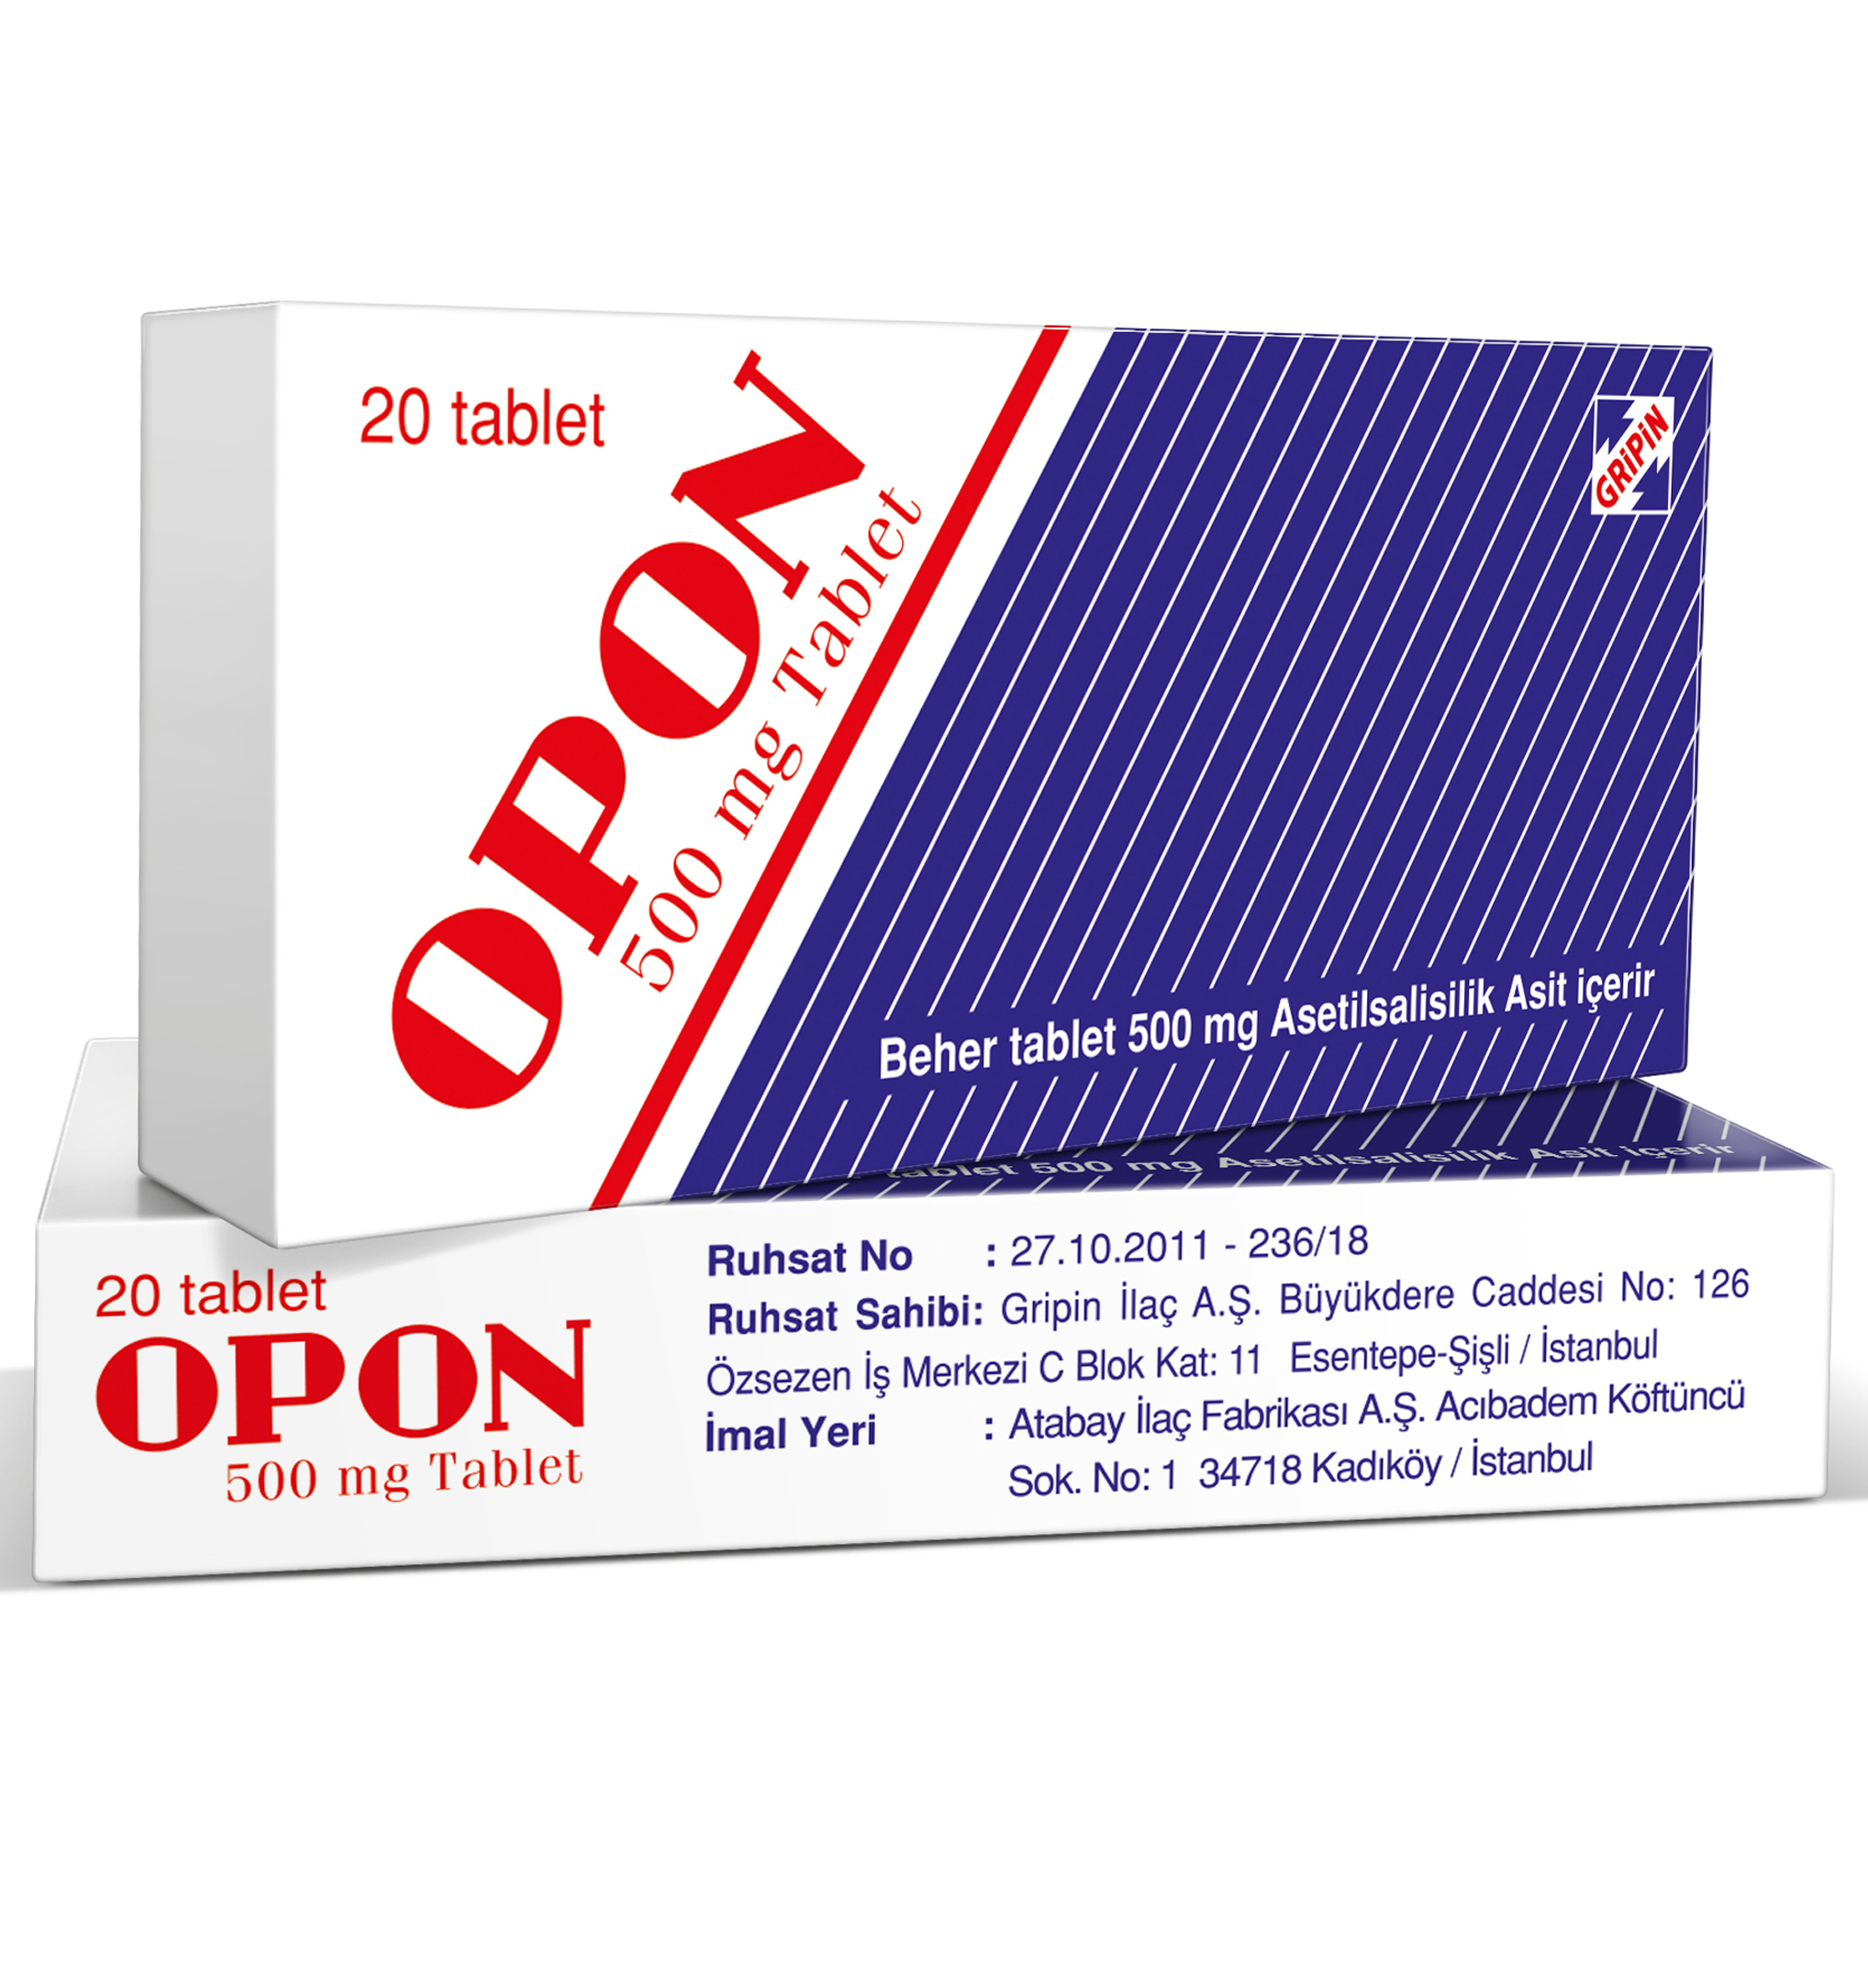 OPON 500 mg 20 tablet kutusunun resmi